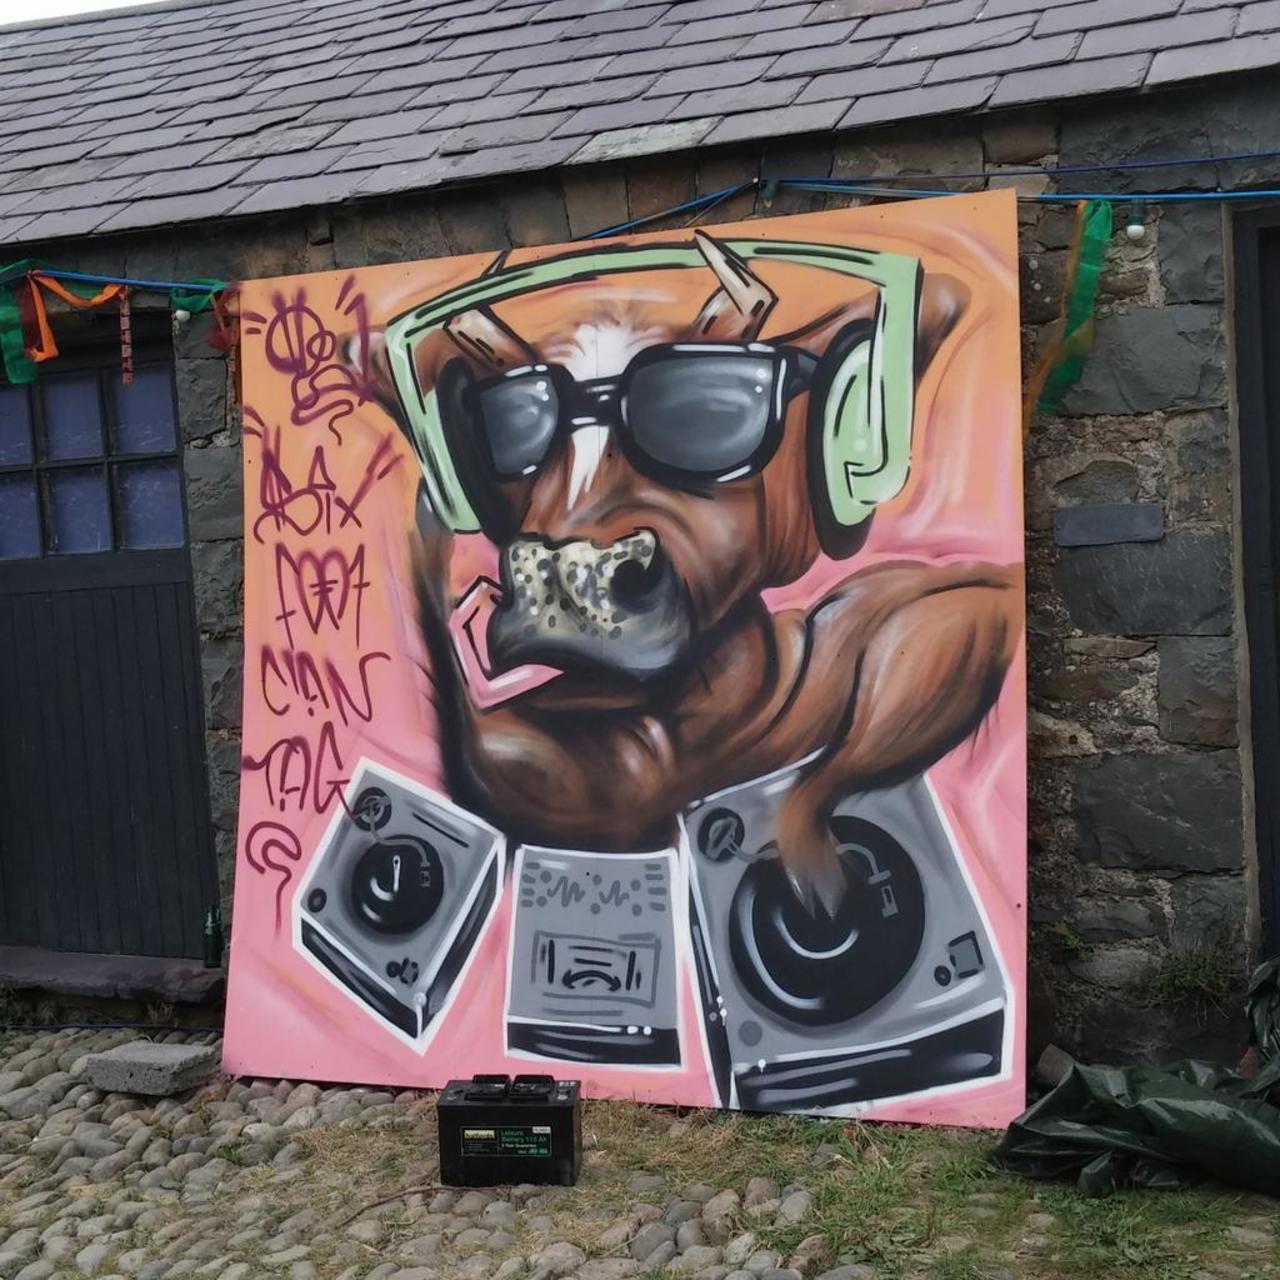 #painted at #audiofarm last #weekend.
#graffiti #art #mtn94 #music #hiphop #wales #cymru #mural #streetart #kush #420 http://t.co/7IRegaCscz